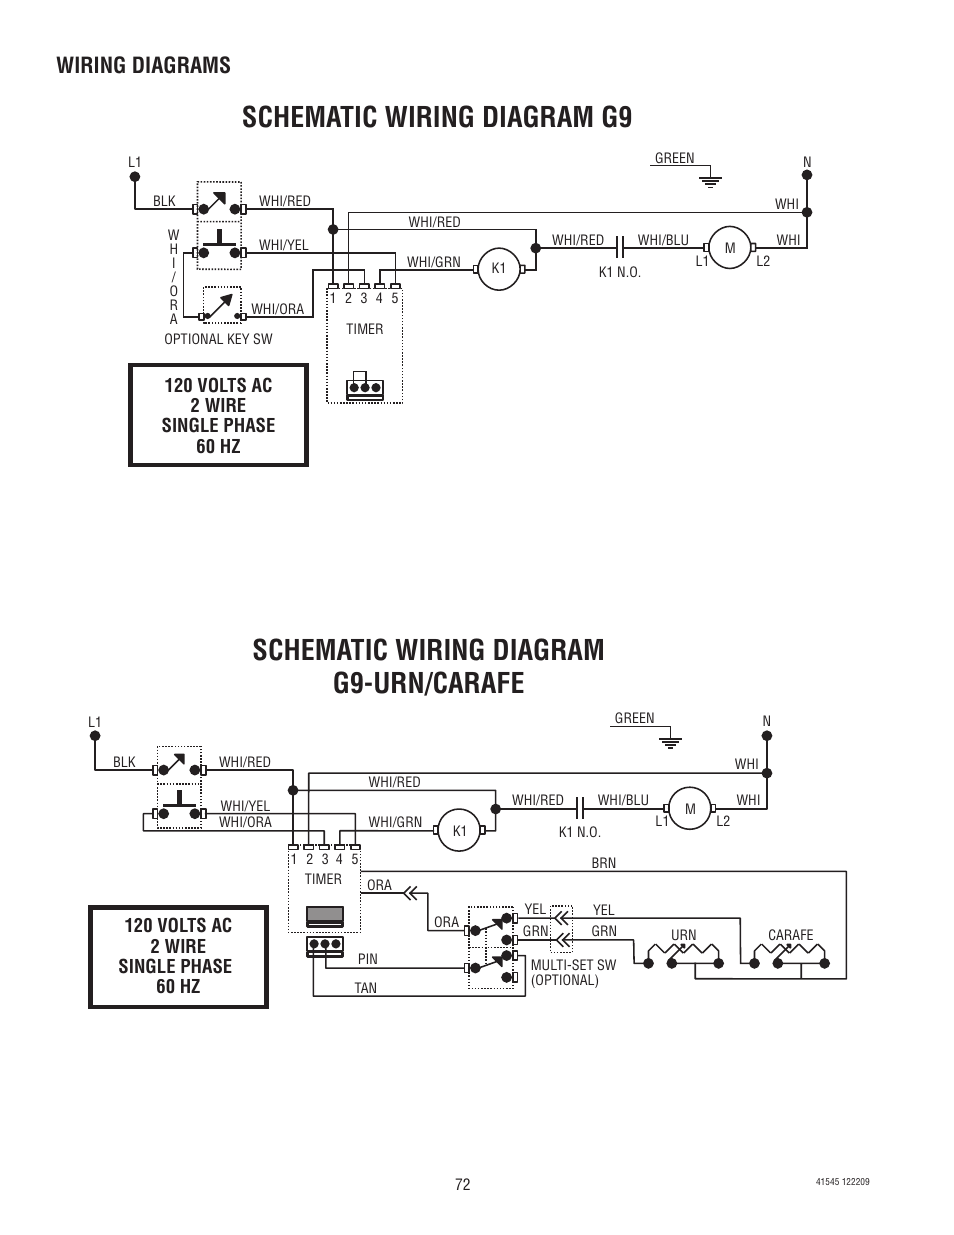 Schematic wiring diagram g9, Schematic wiring diagram g9-urn/carafe, Wiring diagrams | Bunn G9-2T DBC User Manual | Page 72 / 79